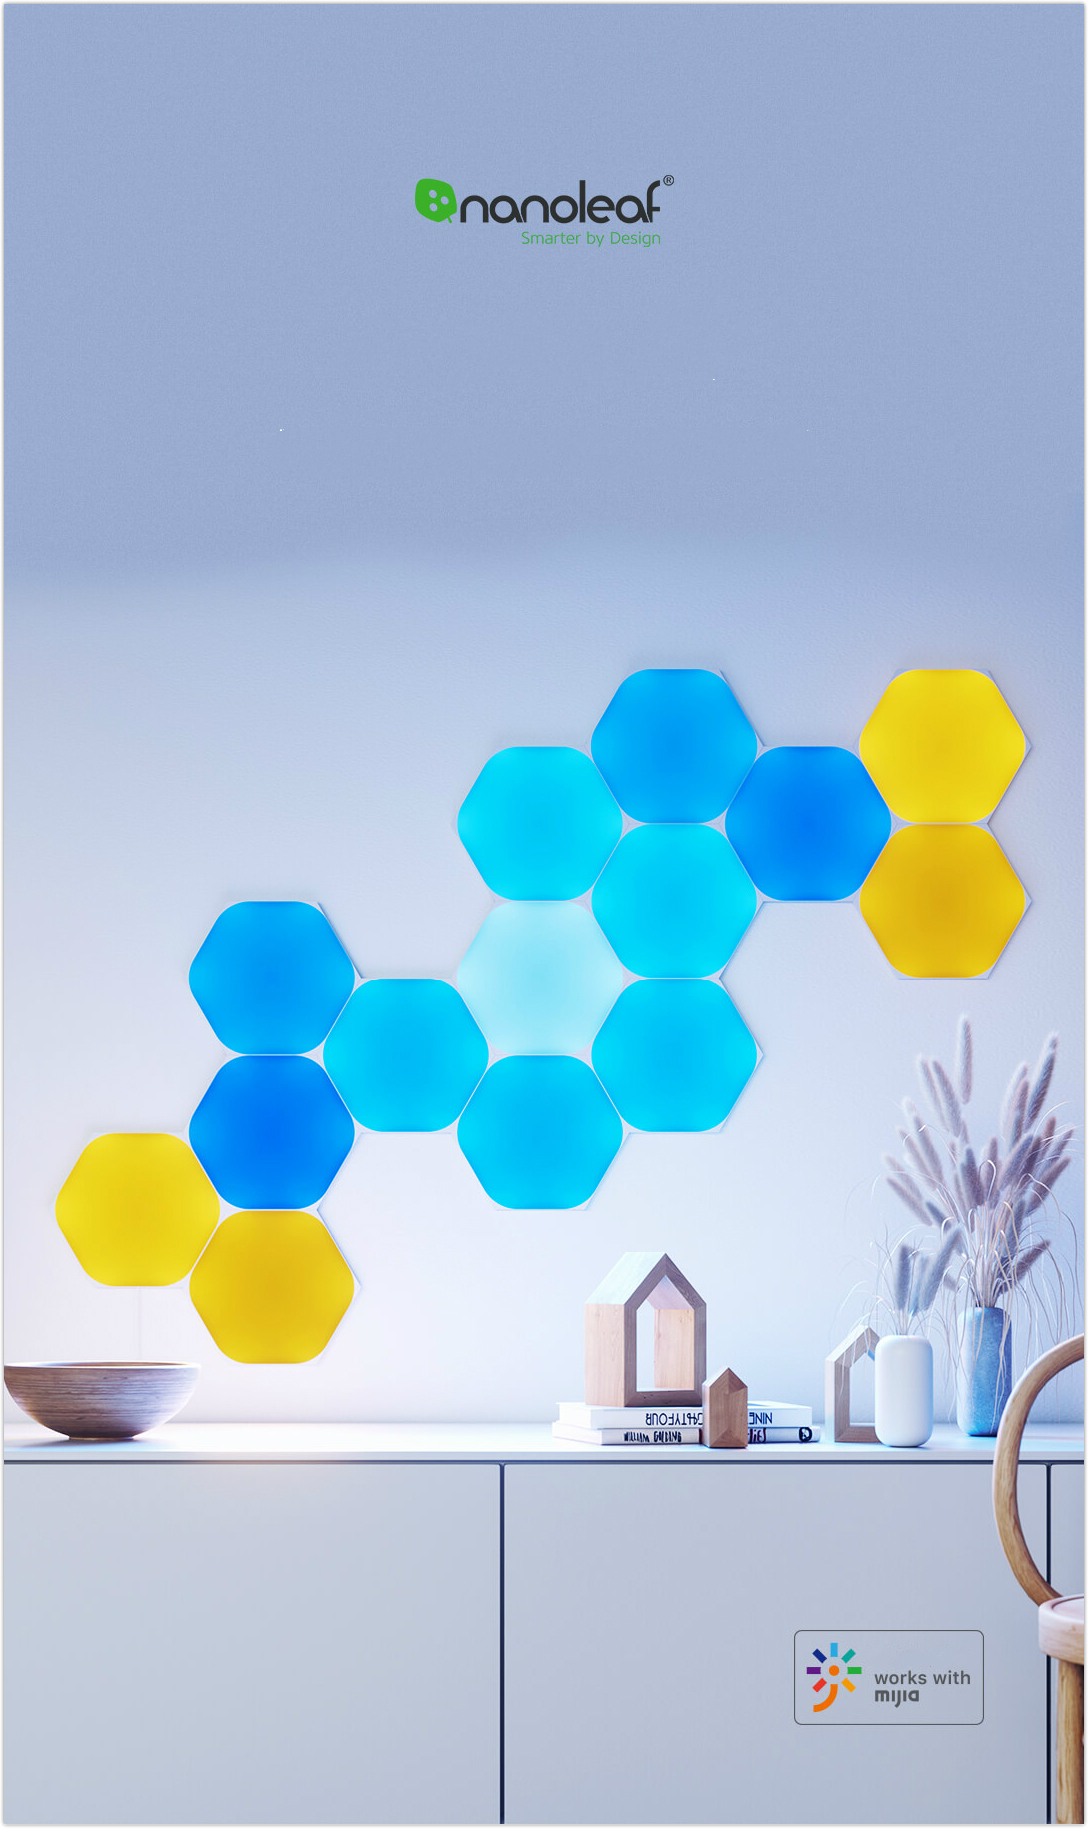 Nanoleaf-Shapes-Hexagons-Wifi-Smart-LED-Light-Kit-DIY-Night-Lamp-Touch-Voice-APP-Control-16-Million--1723333-1